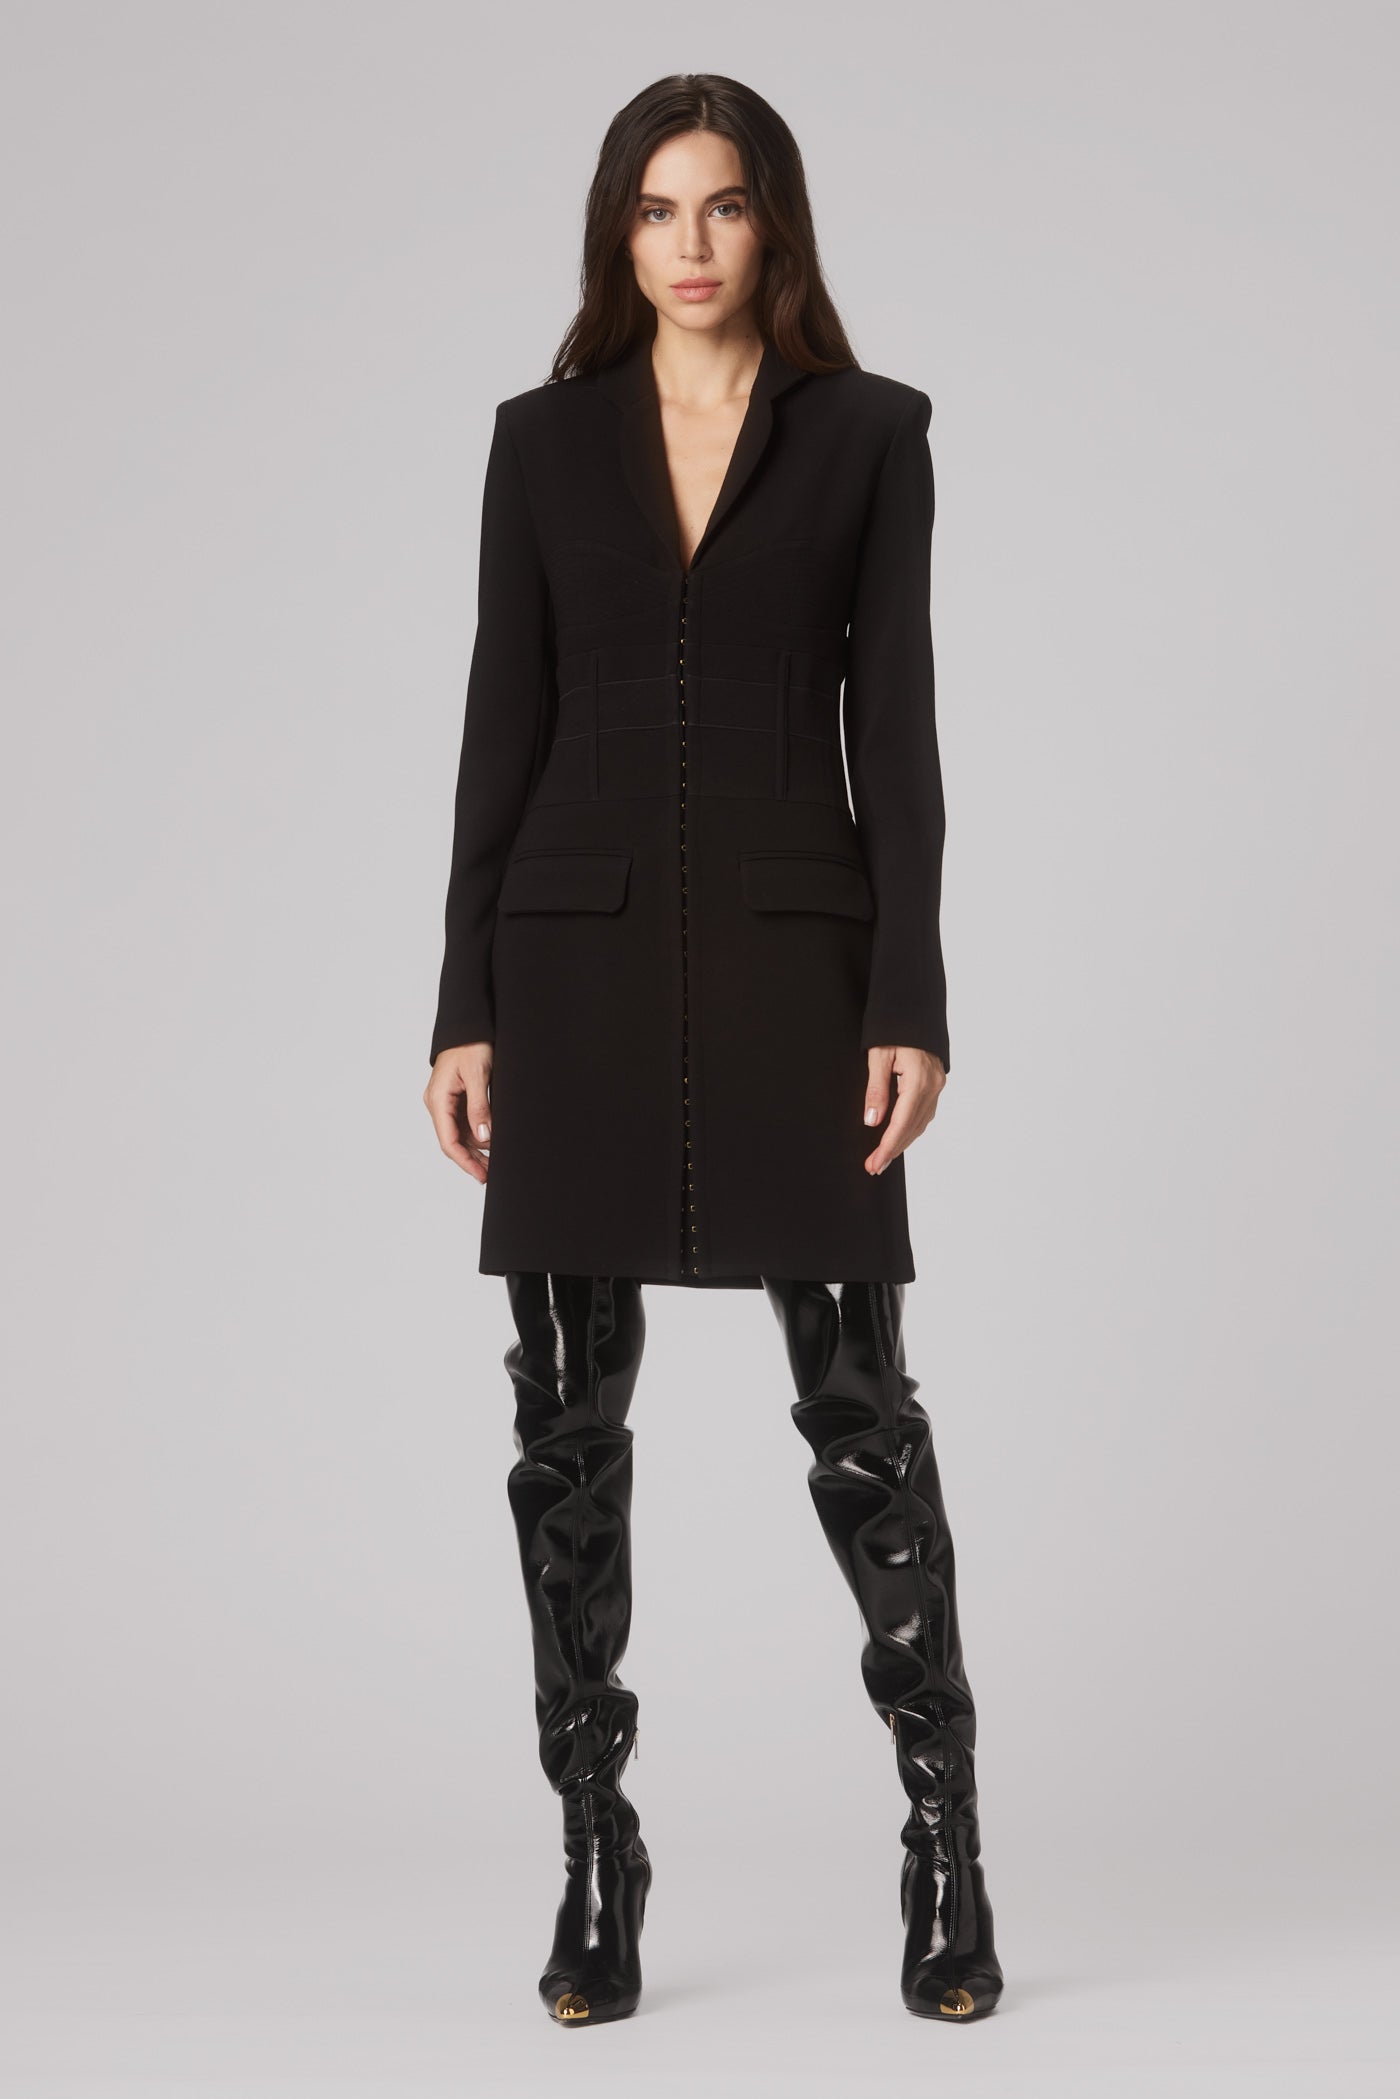 Murmur Grid Underdress Black Mini Dress I Luxury Designer Lingerie